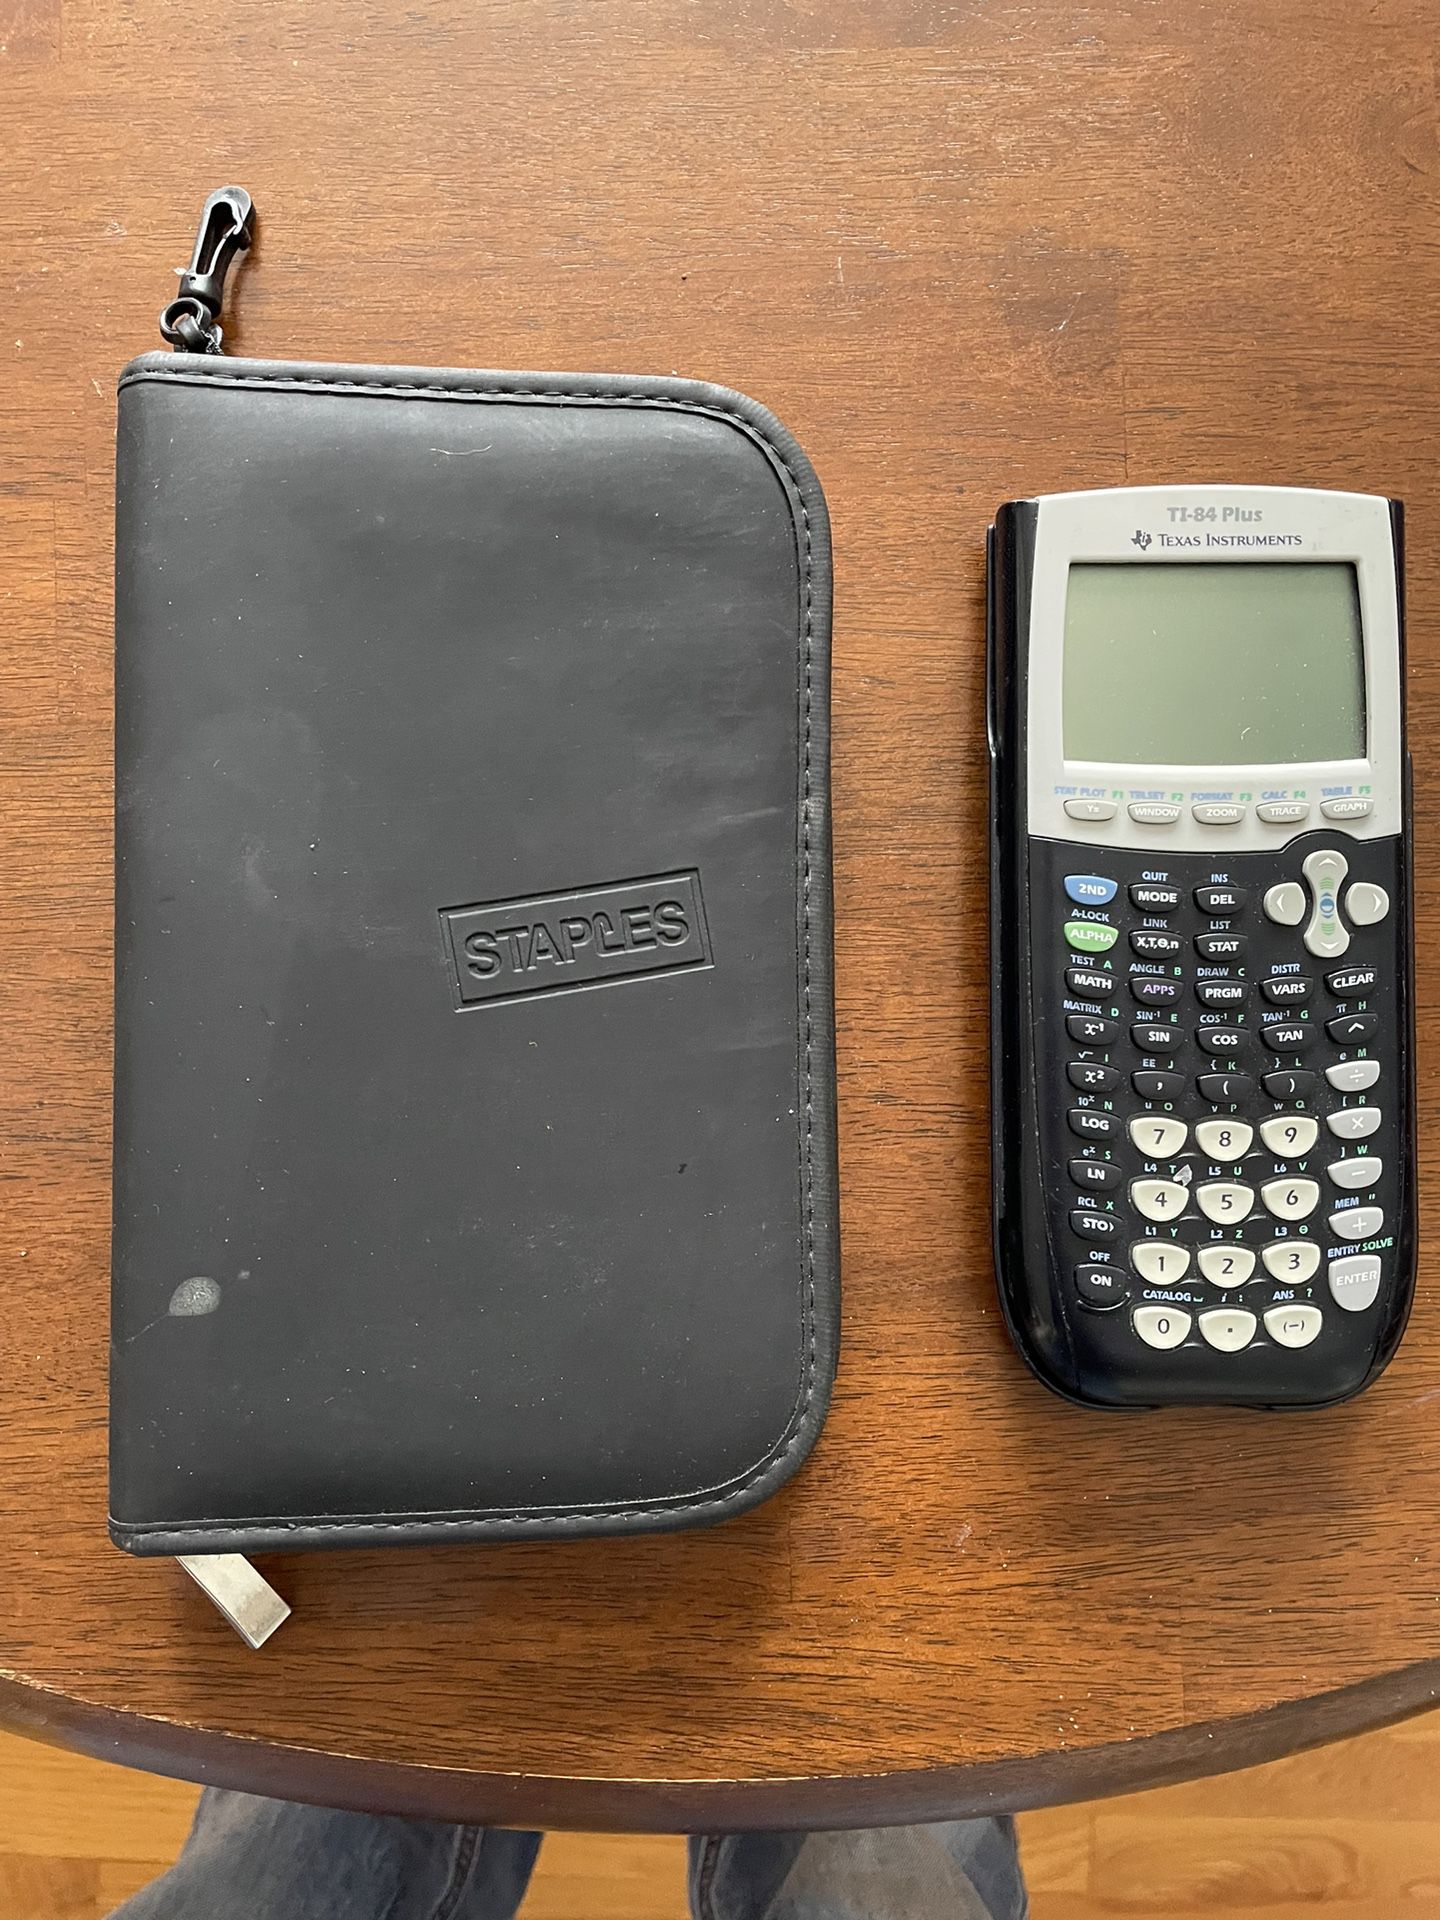 TI84 + Calculator With Case